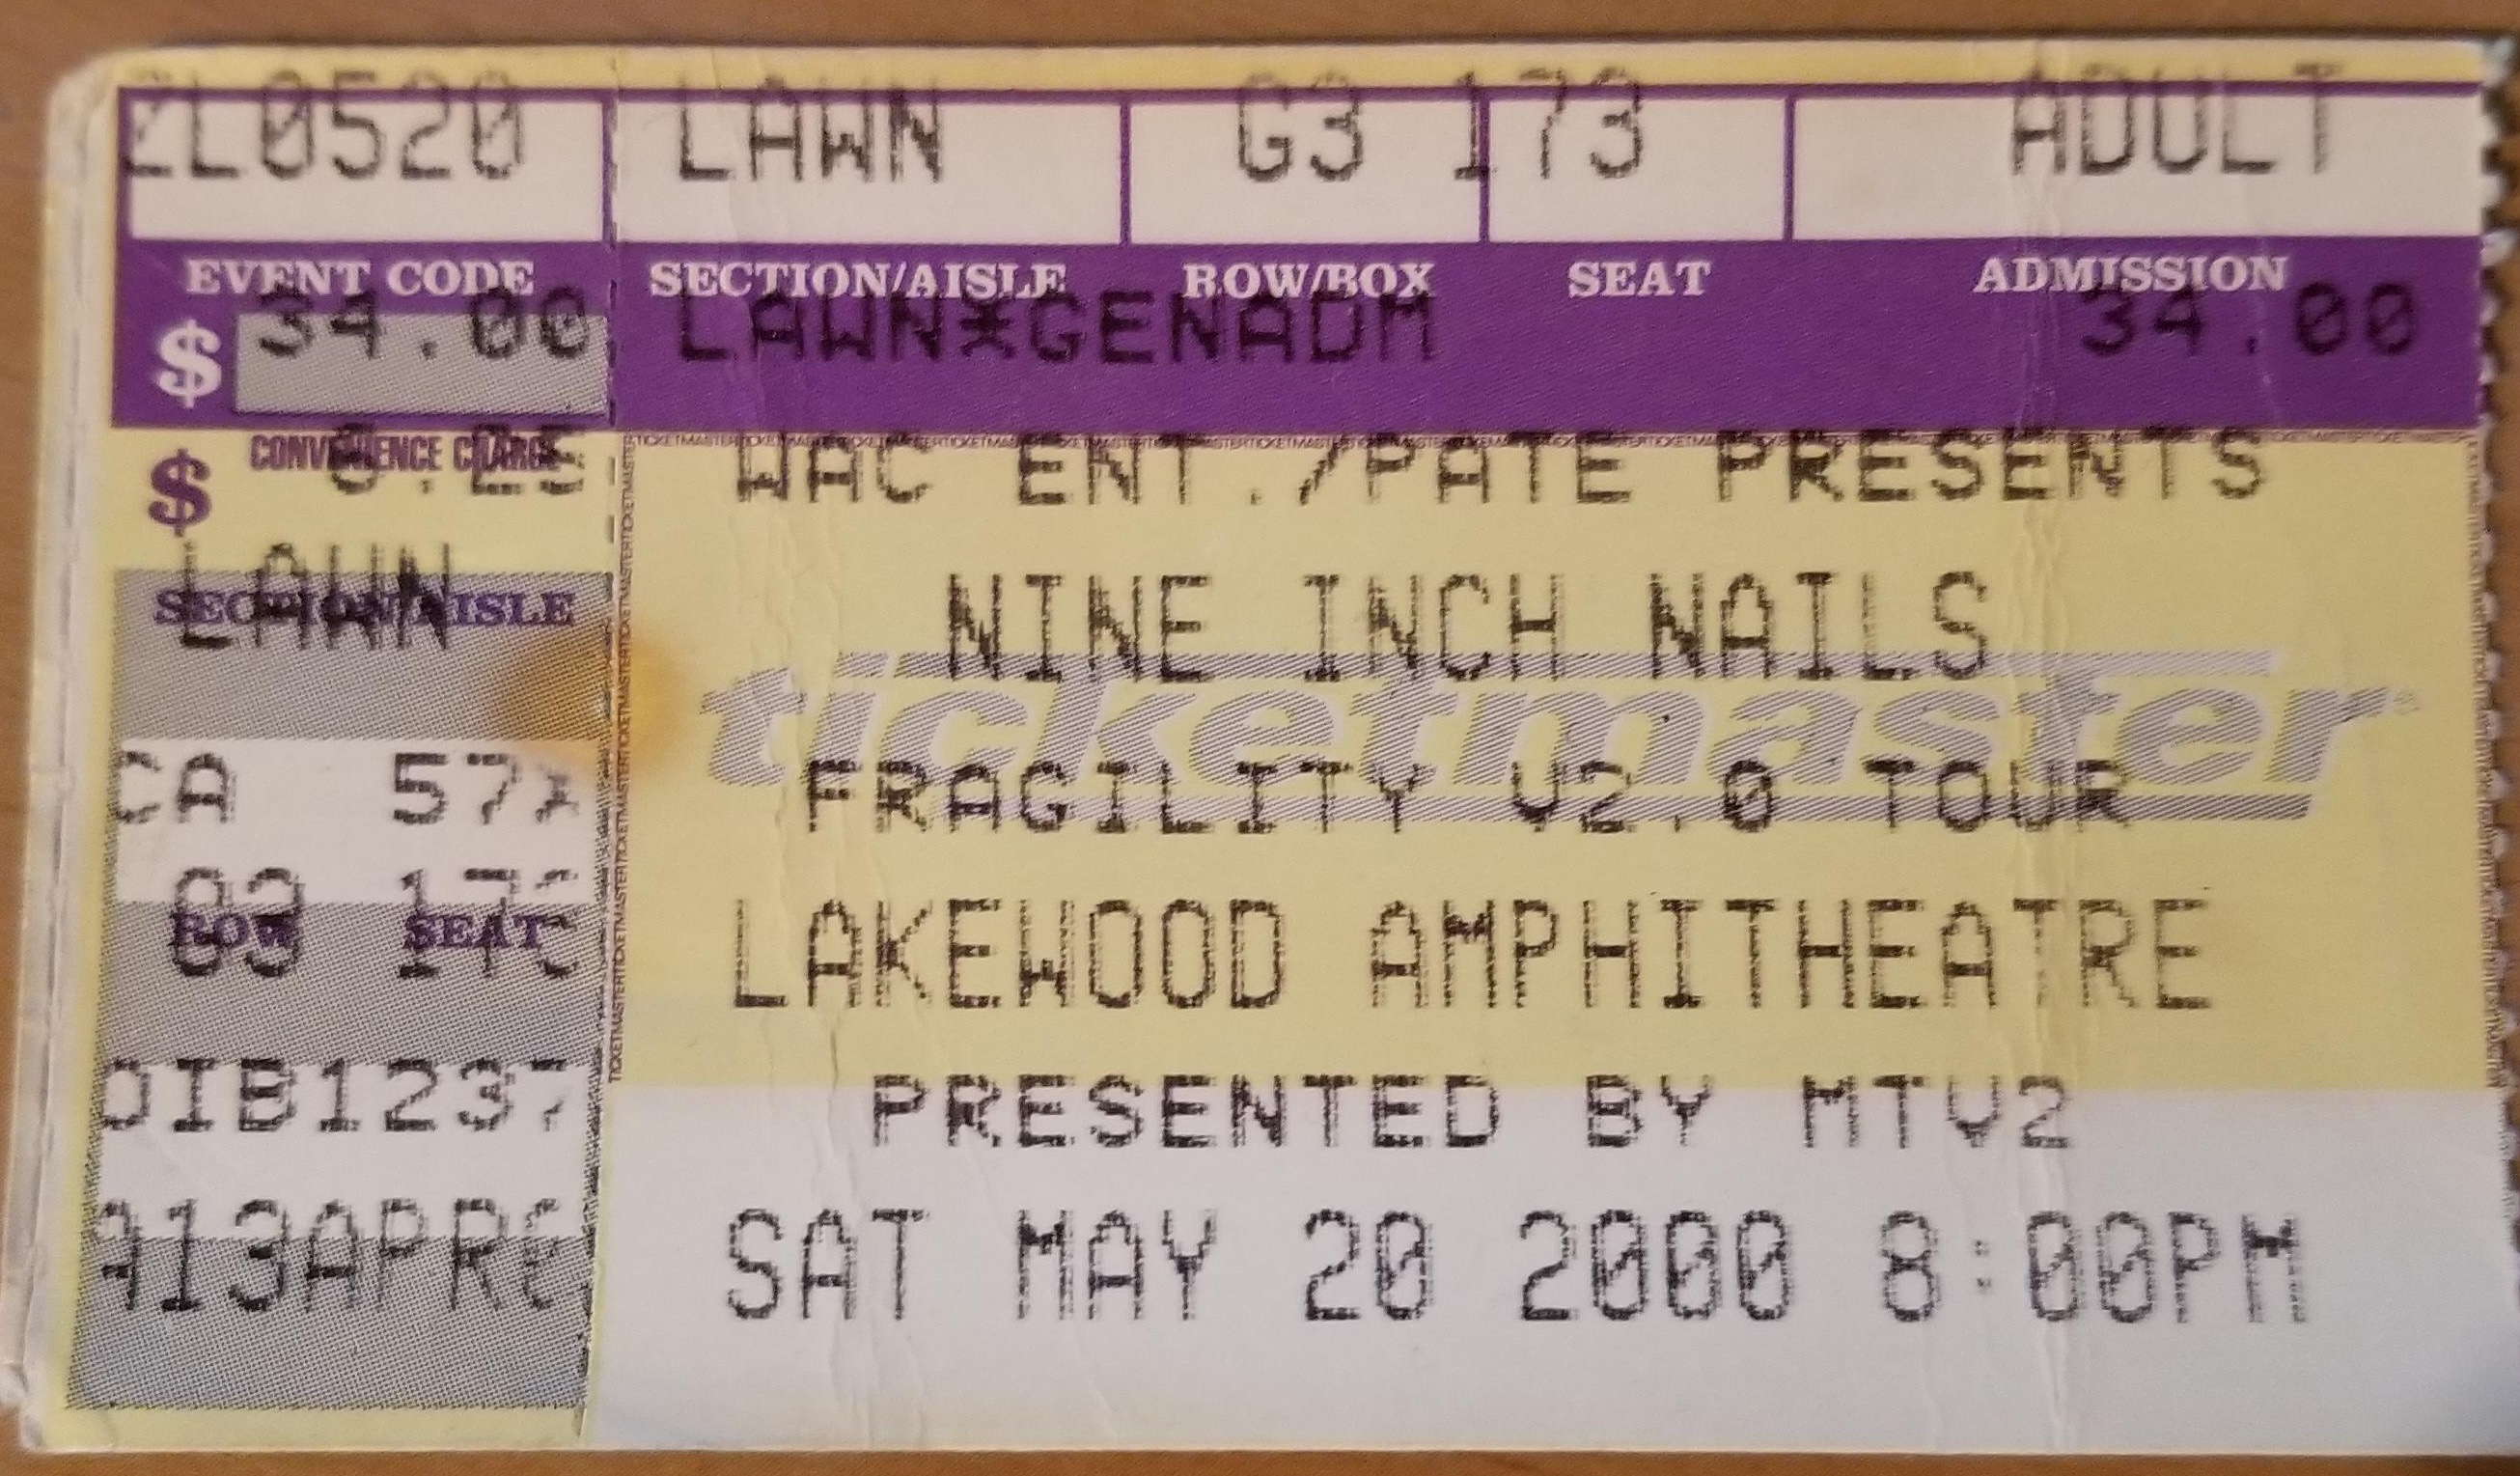 2000/05/20 Ticket